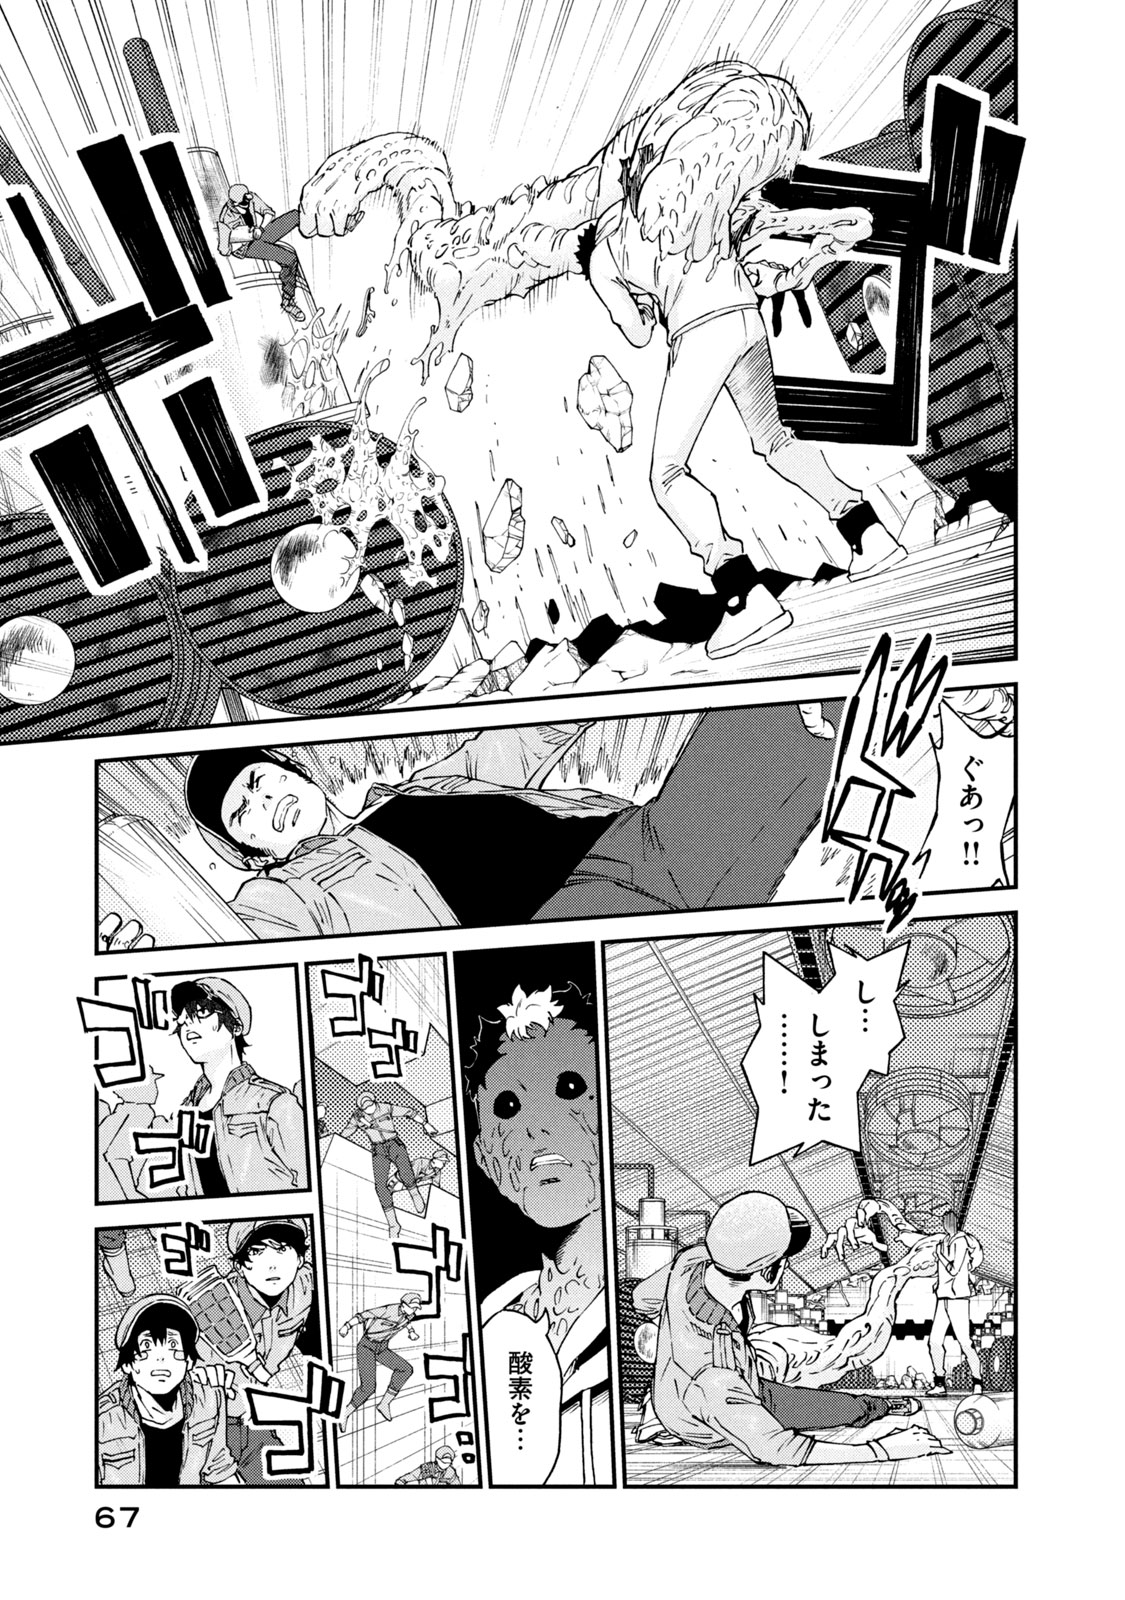 Hataraku Saibou BLACK - Chapter 39 - Page 5